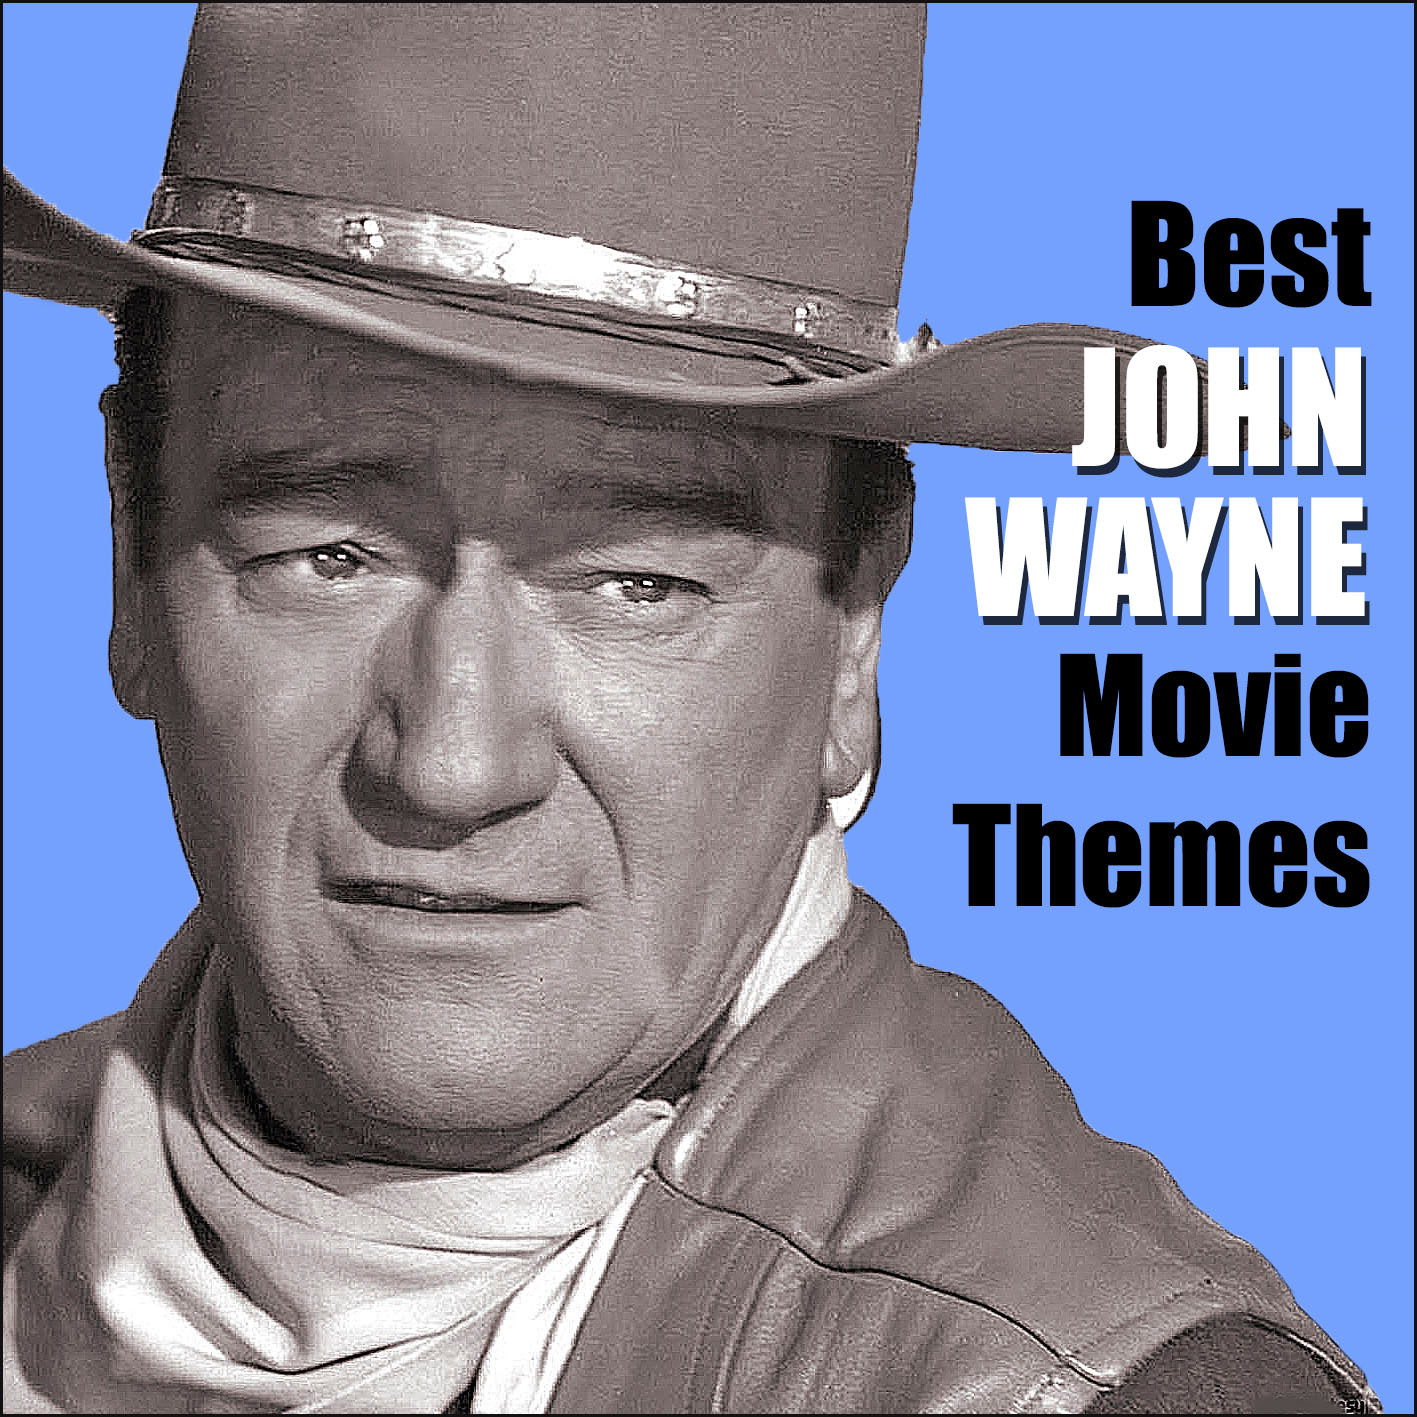 Best John Wayne Movie Themes